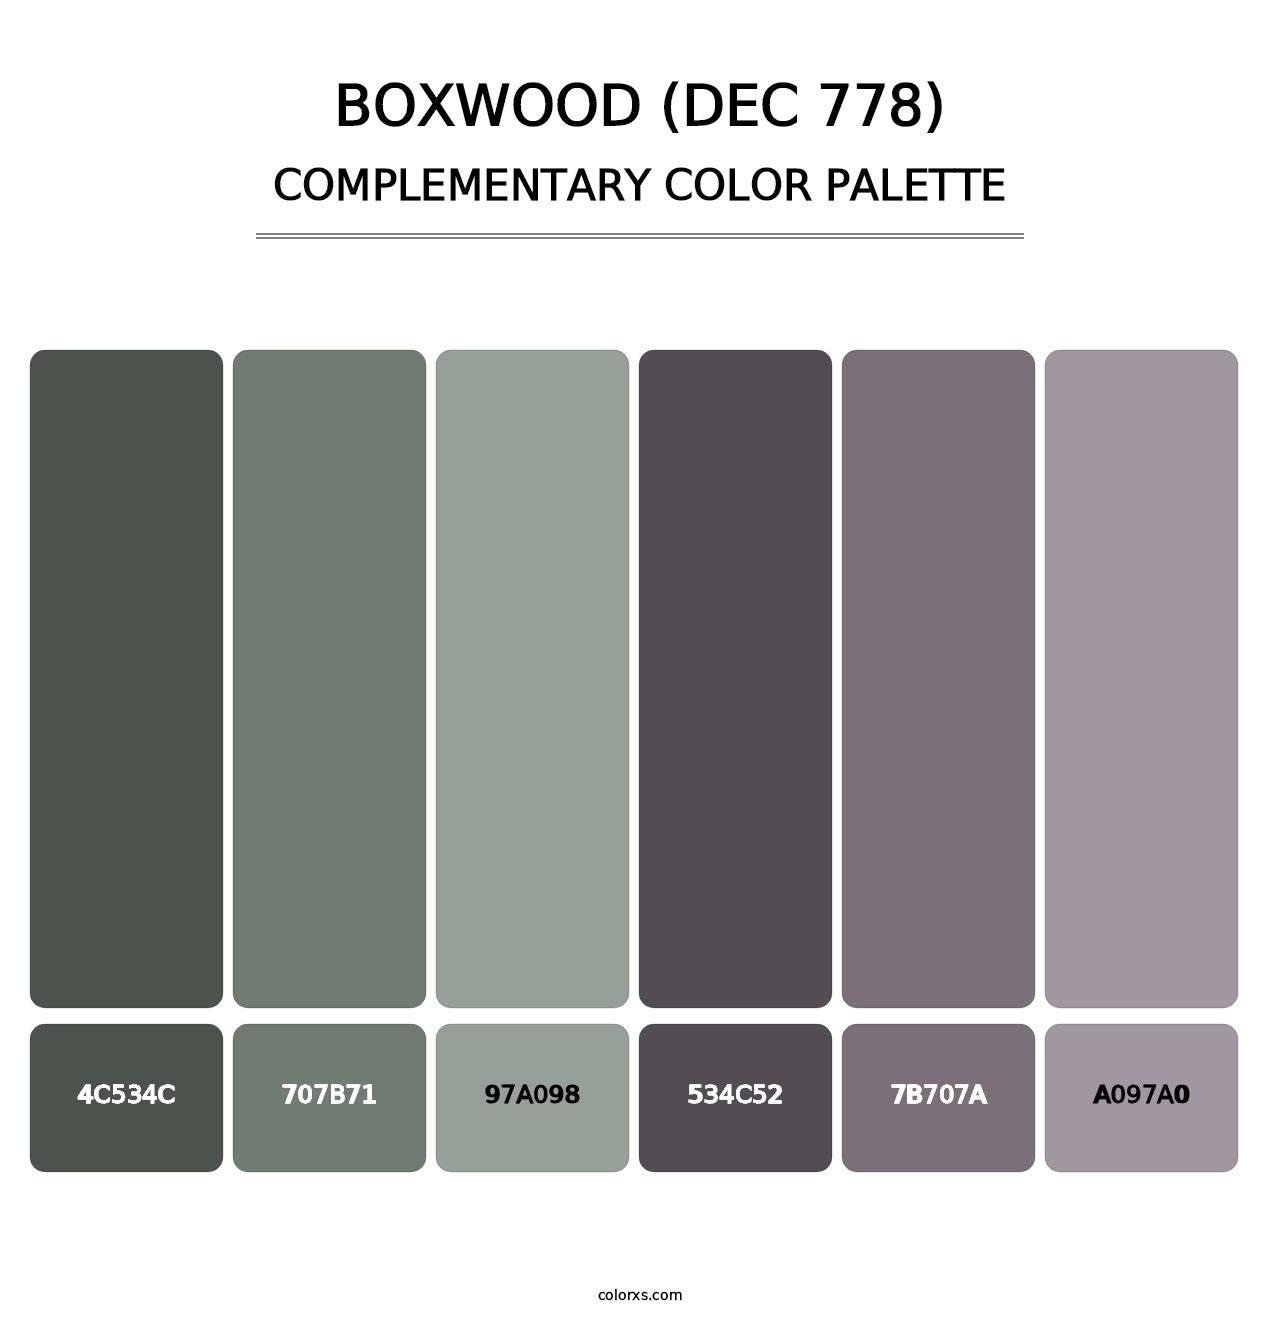 Boxwood (DEC 778) - Complementary Color Palette